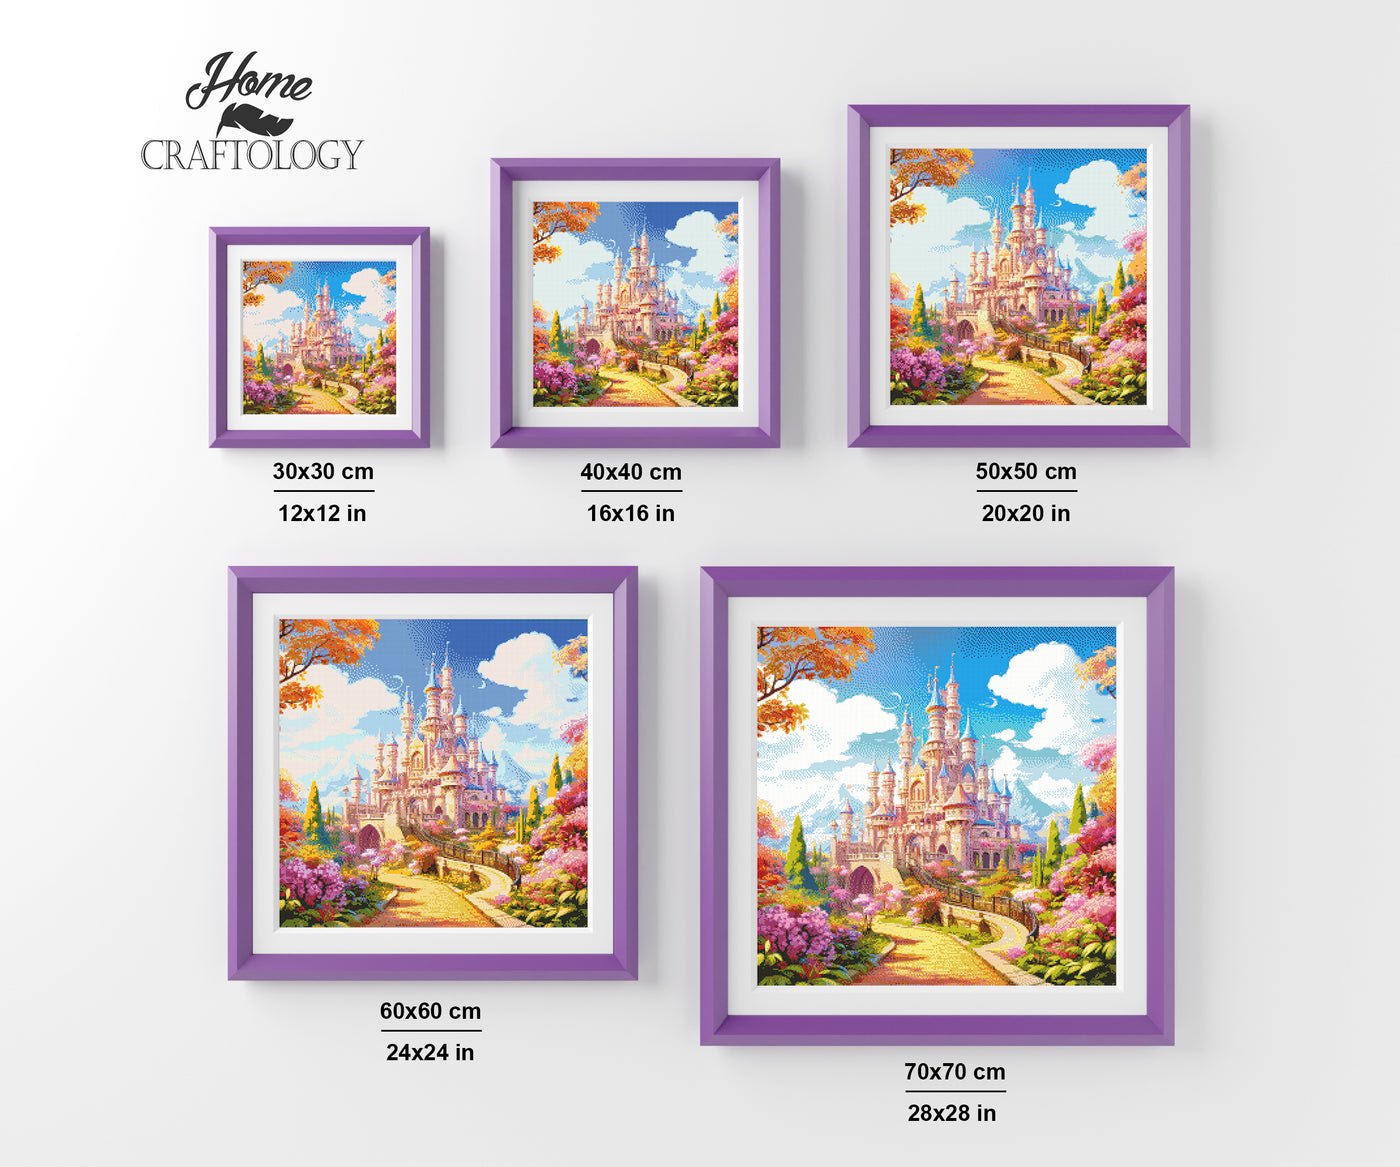 Castle with Colorful Flowers - Premium Diamond Painting Kit